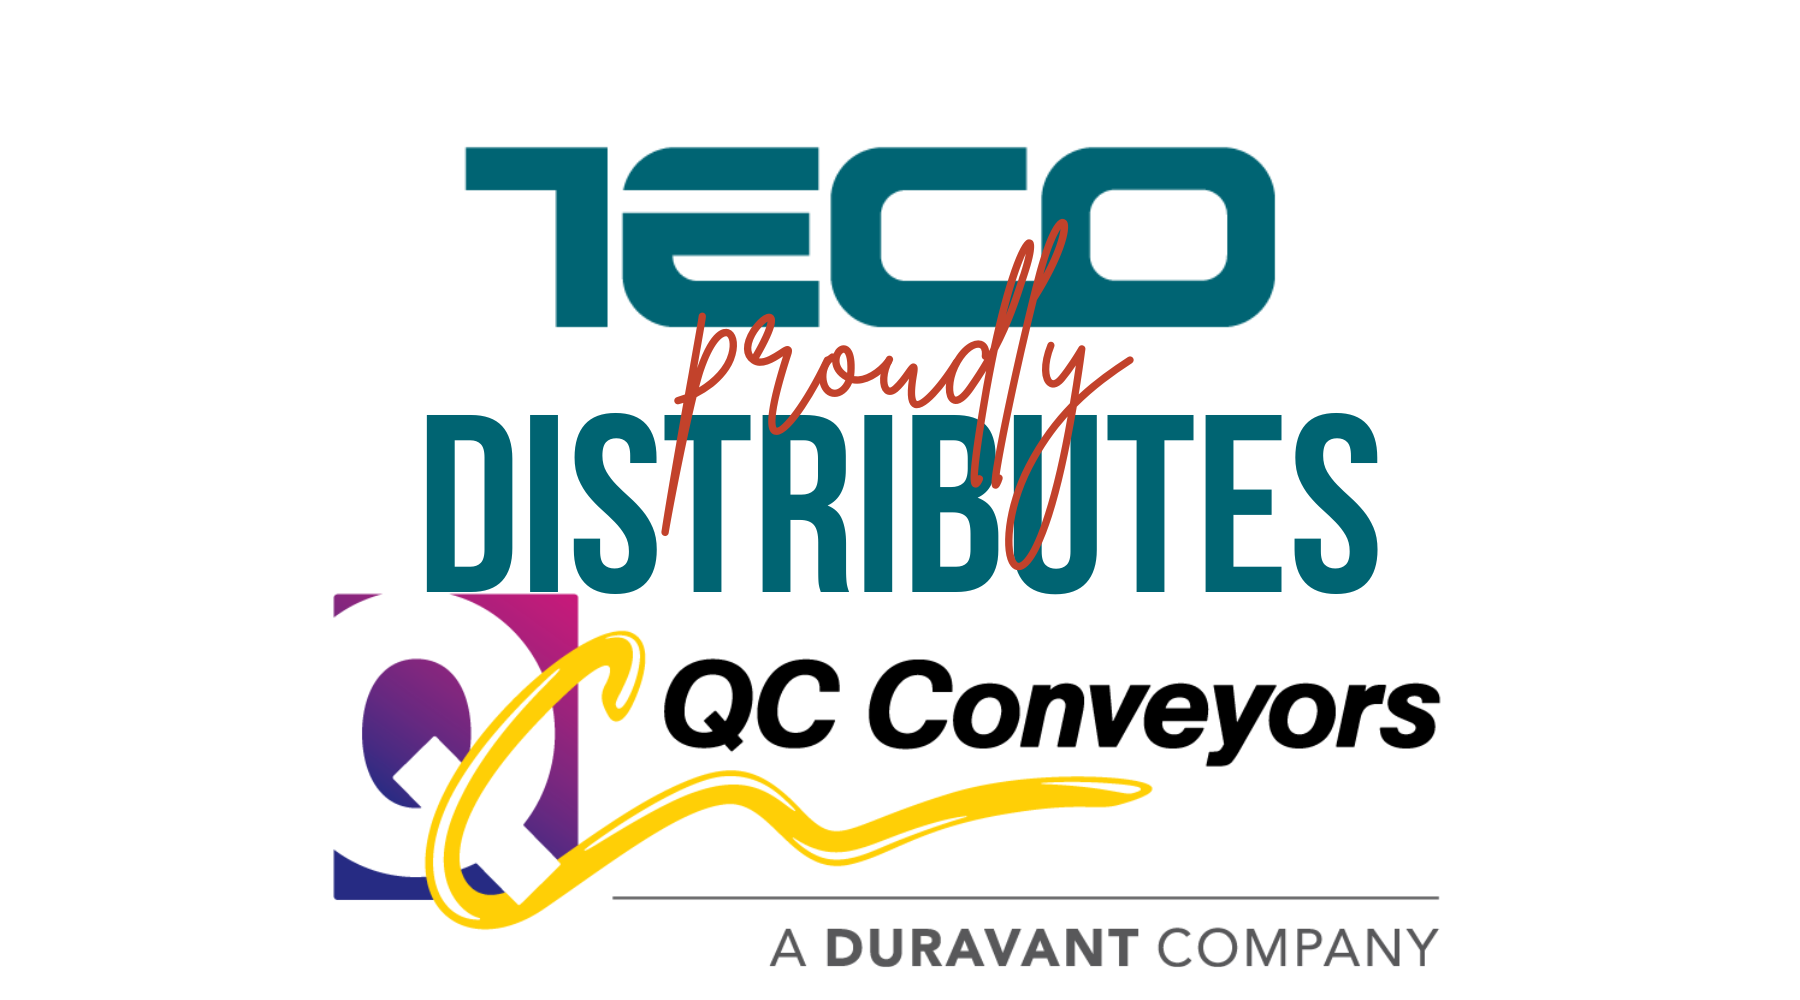 Teco proudly distributes Q C Conveyors a Duravant Company